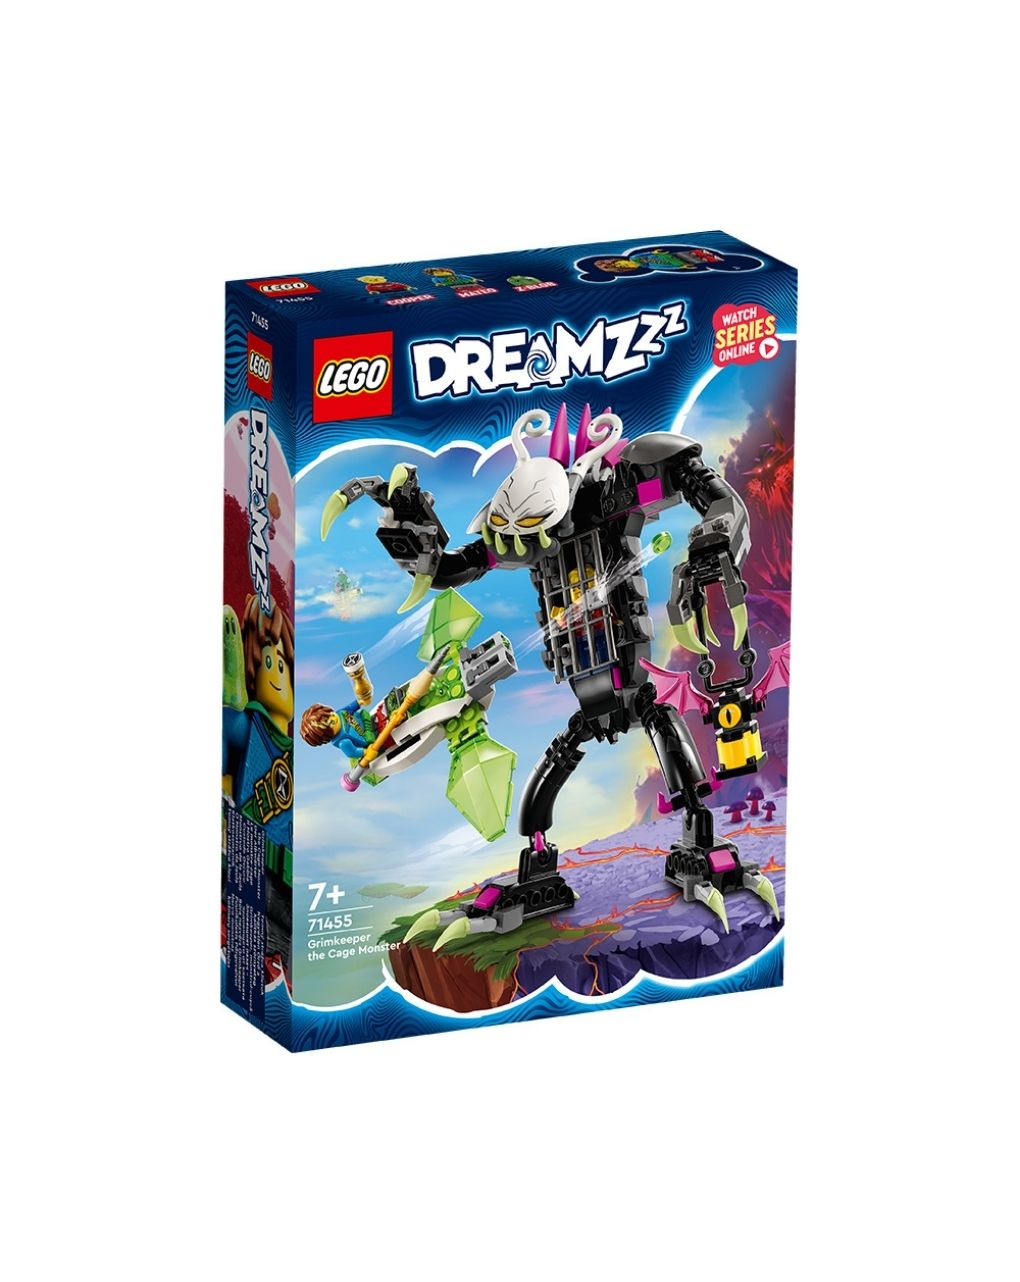 Lego dreamzzz μοχθηροφύλακας το τέρας – κλουβί 71455 - Lego, LEGO DREAMZZZ